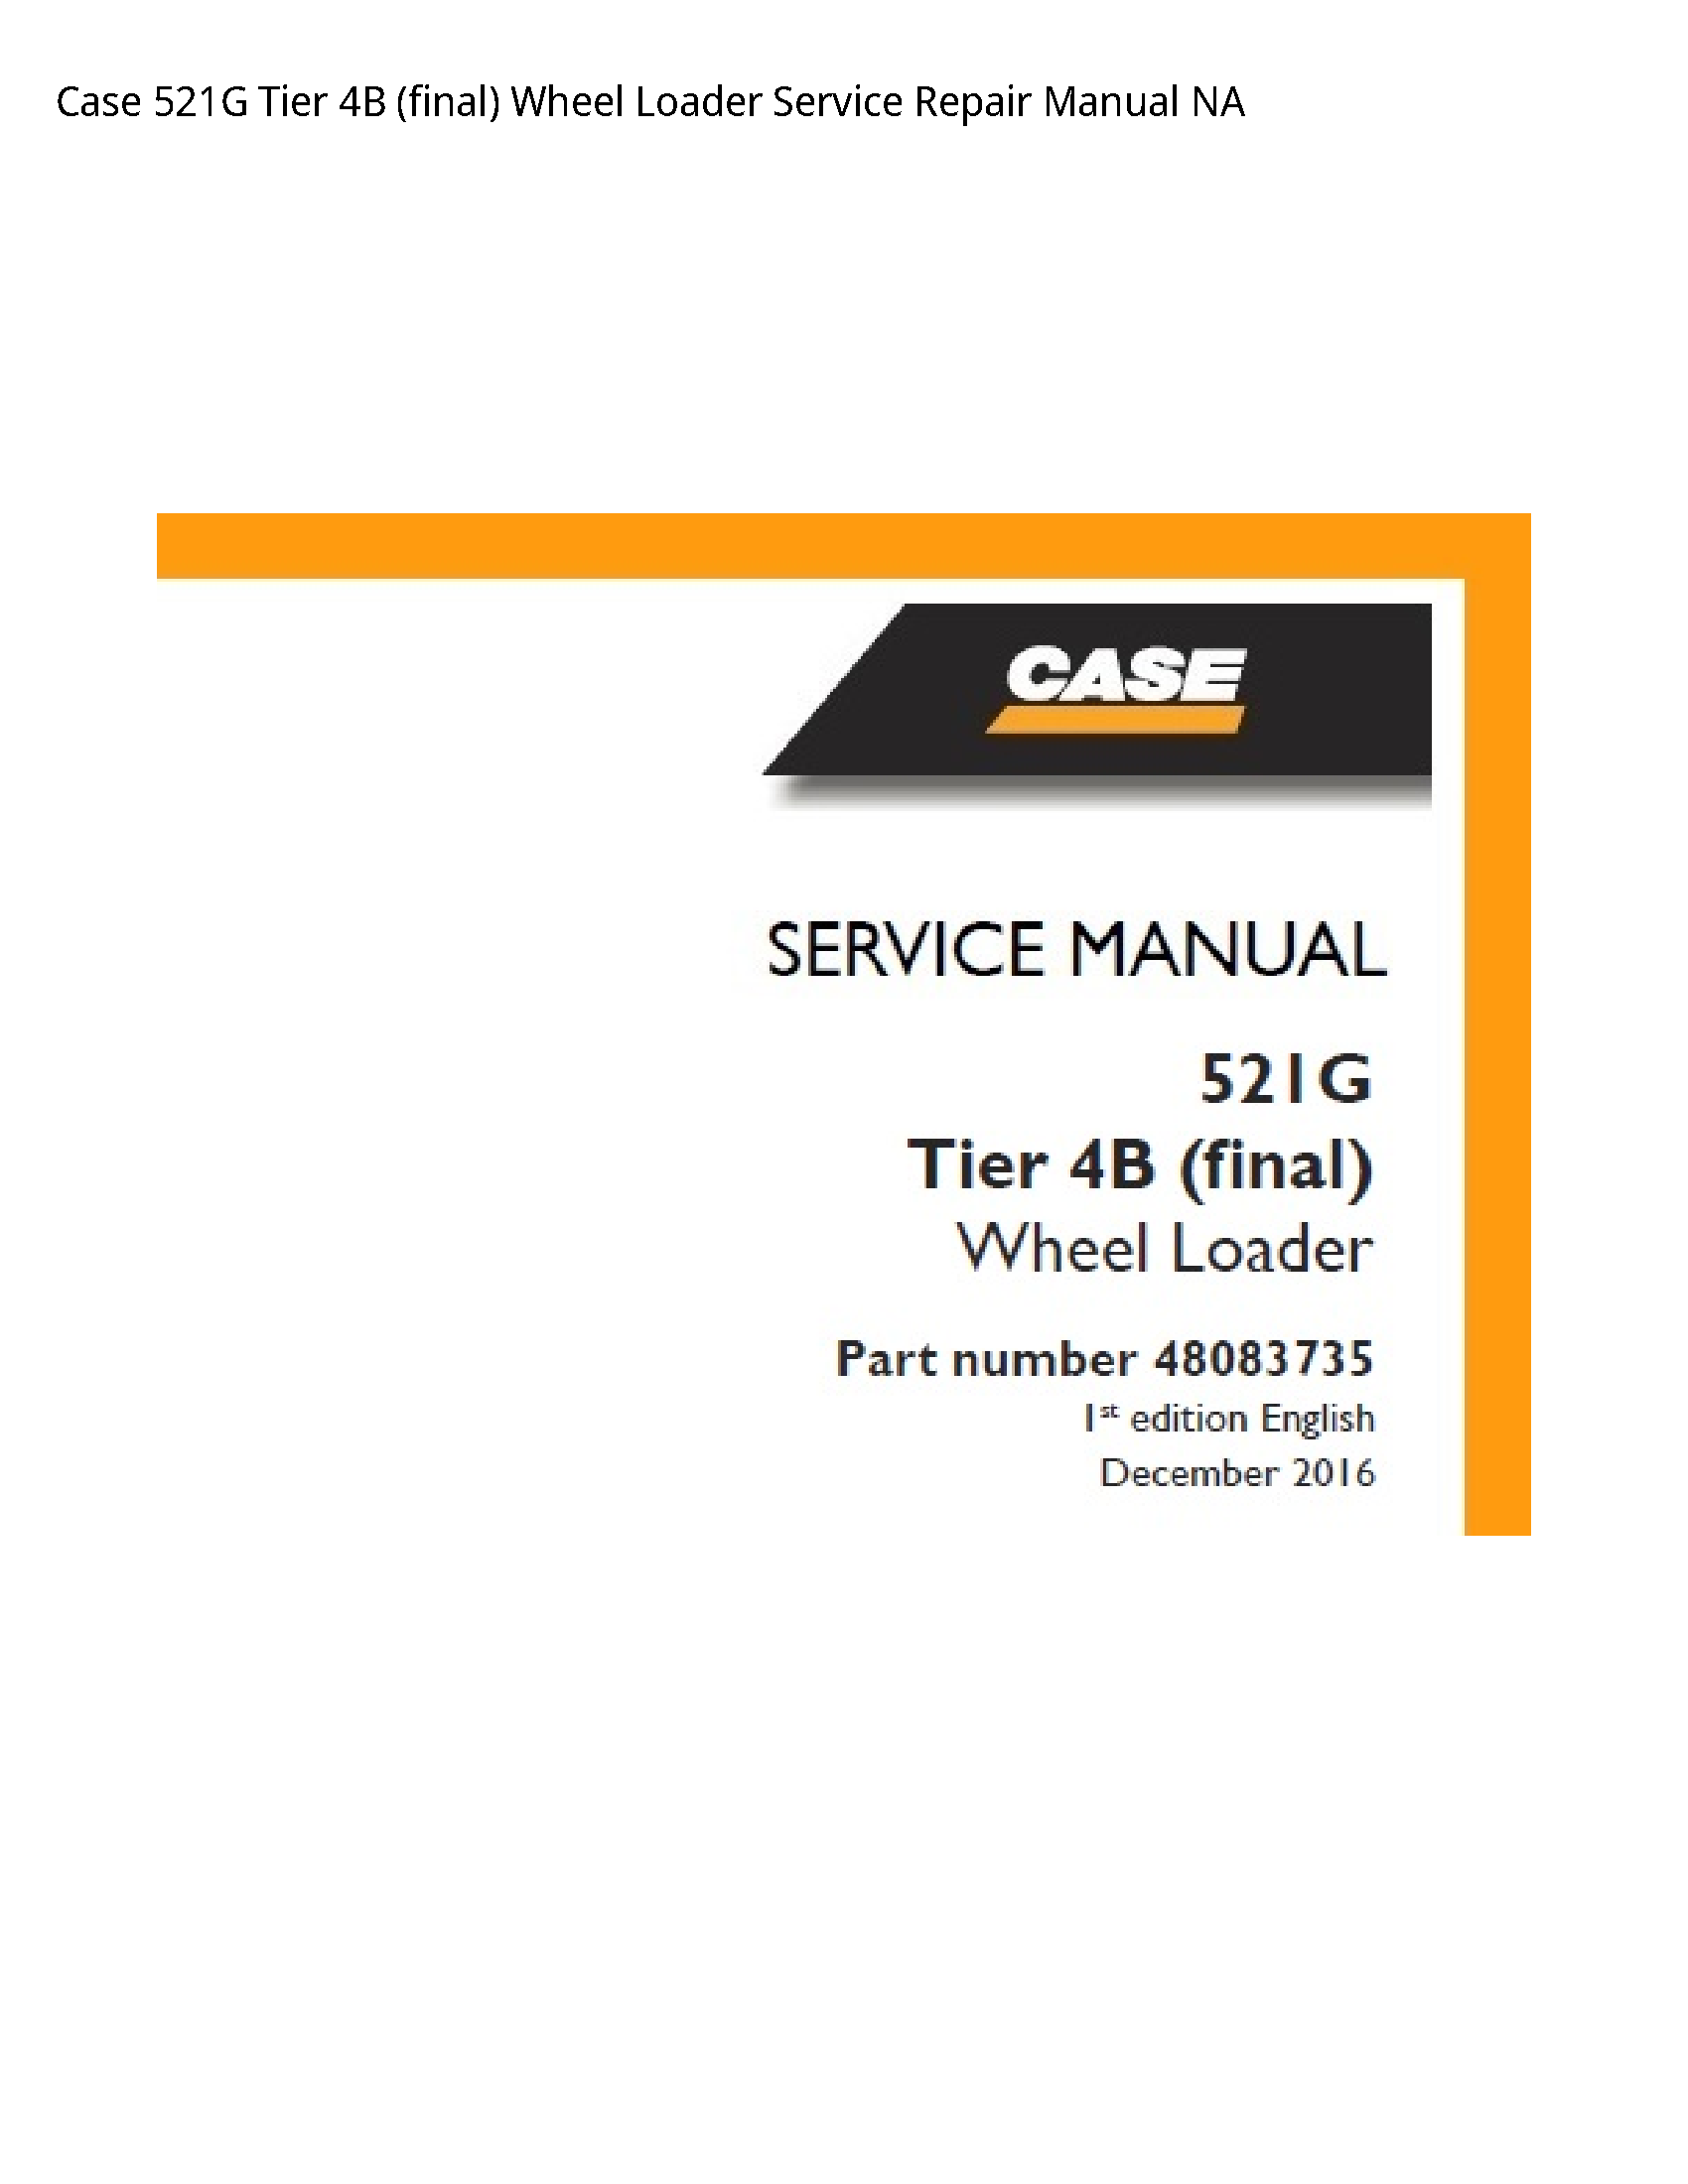 Case/Case IH 521G Tier (final) Wheel Loader manual